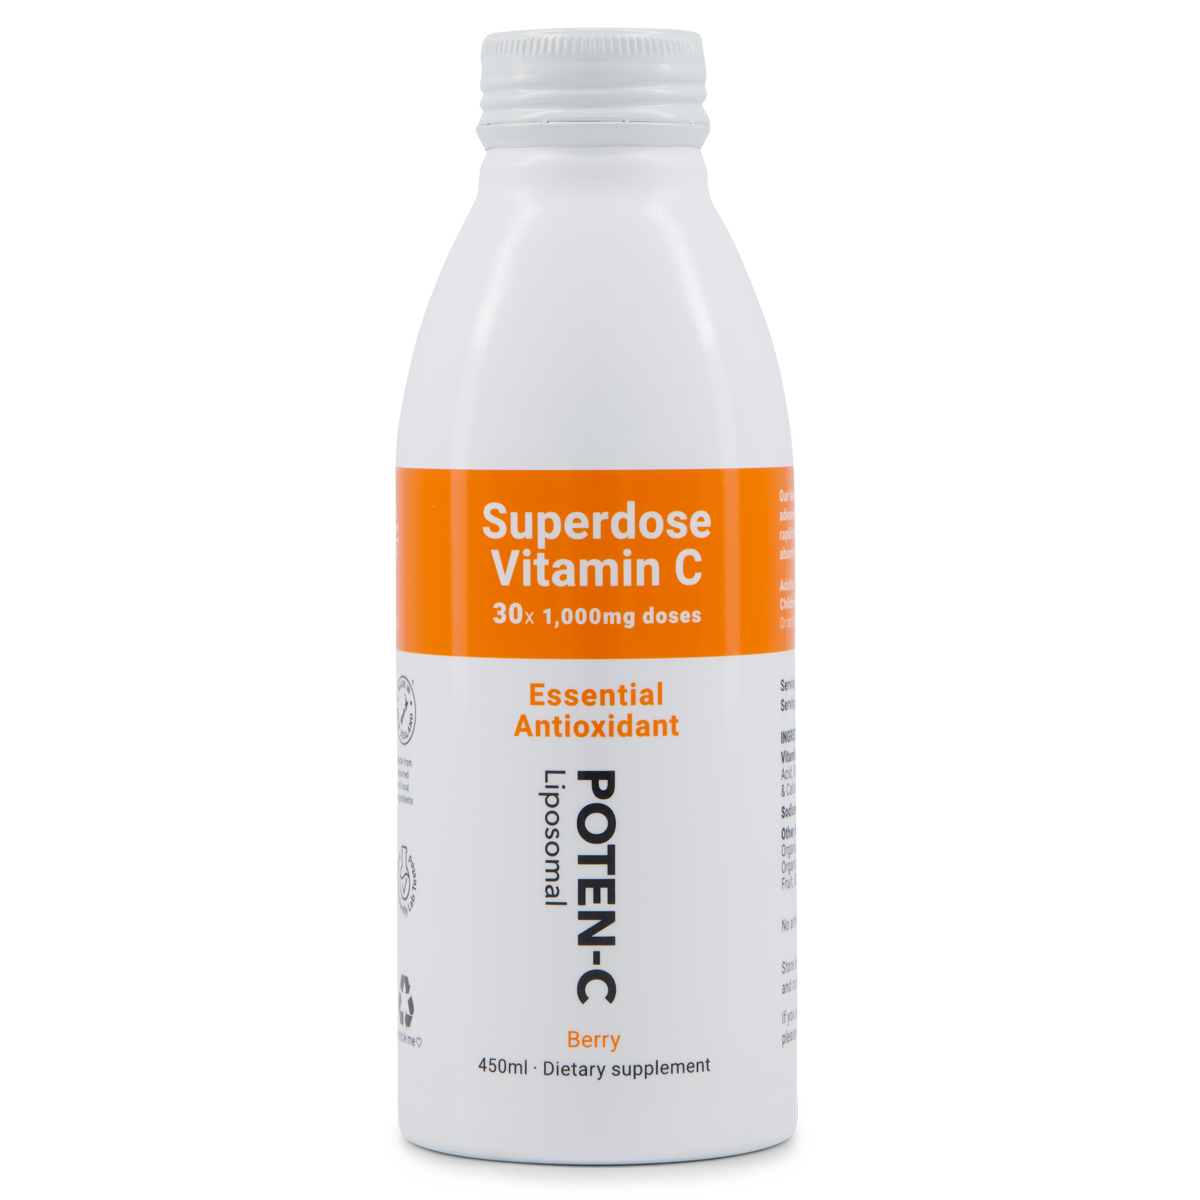 Poten-C Superdose Liposomal Vitamin C - 30x 1000mg Doses 450ml Berry + FREE Gift with Purchase (75ml 1000mg Liposomal Vitamin C)